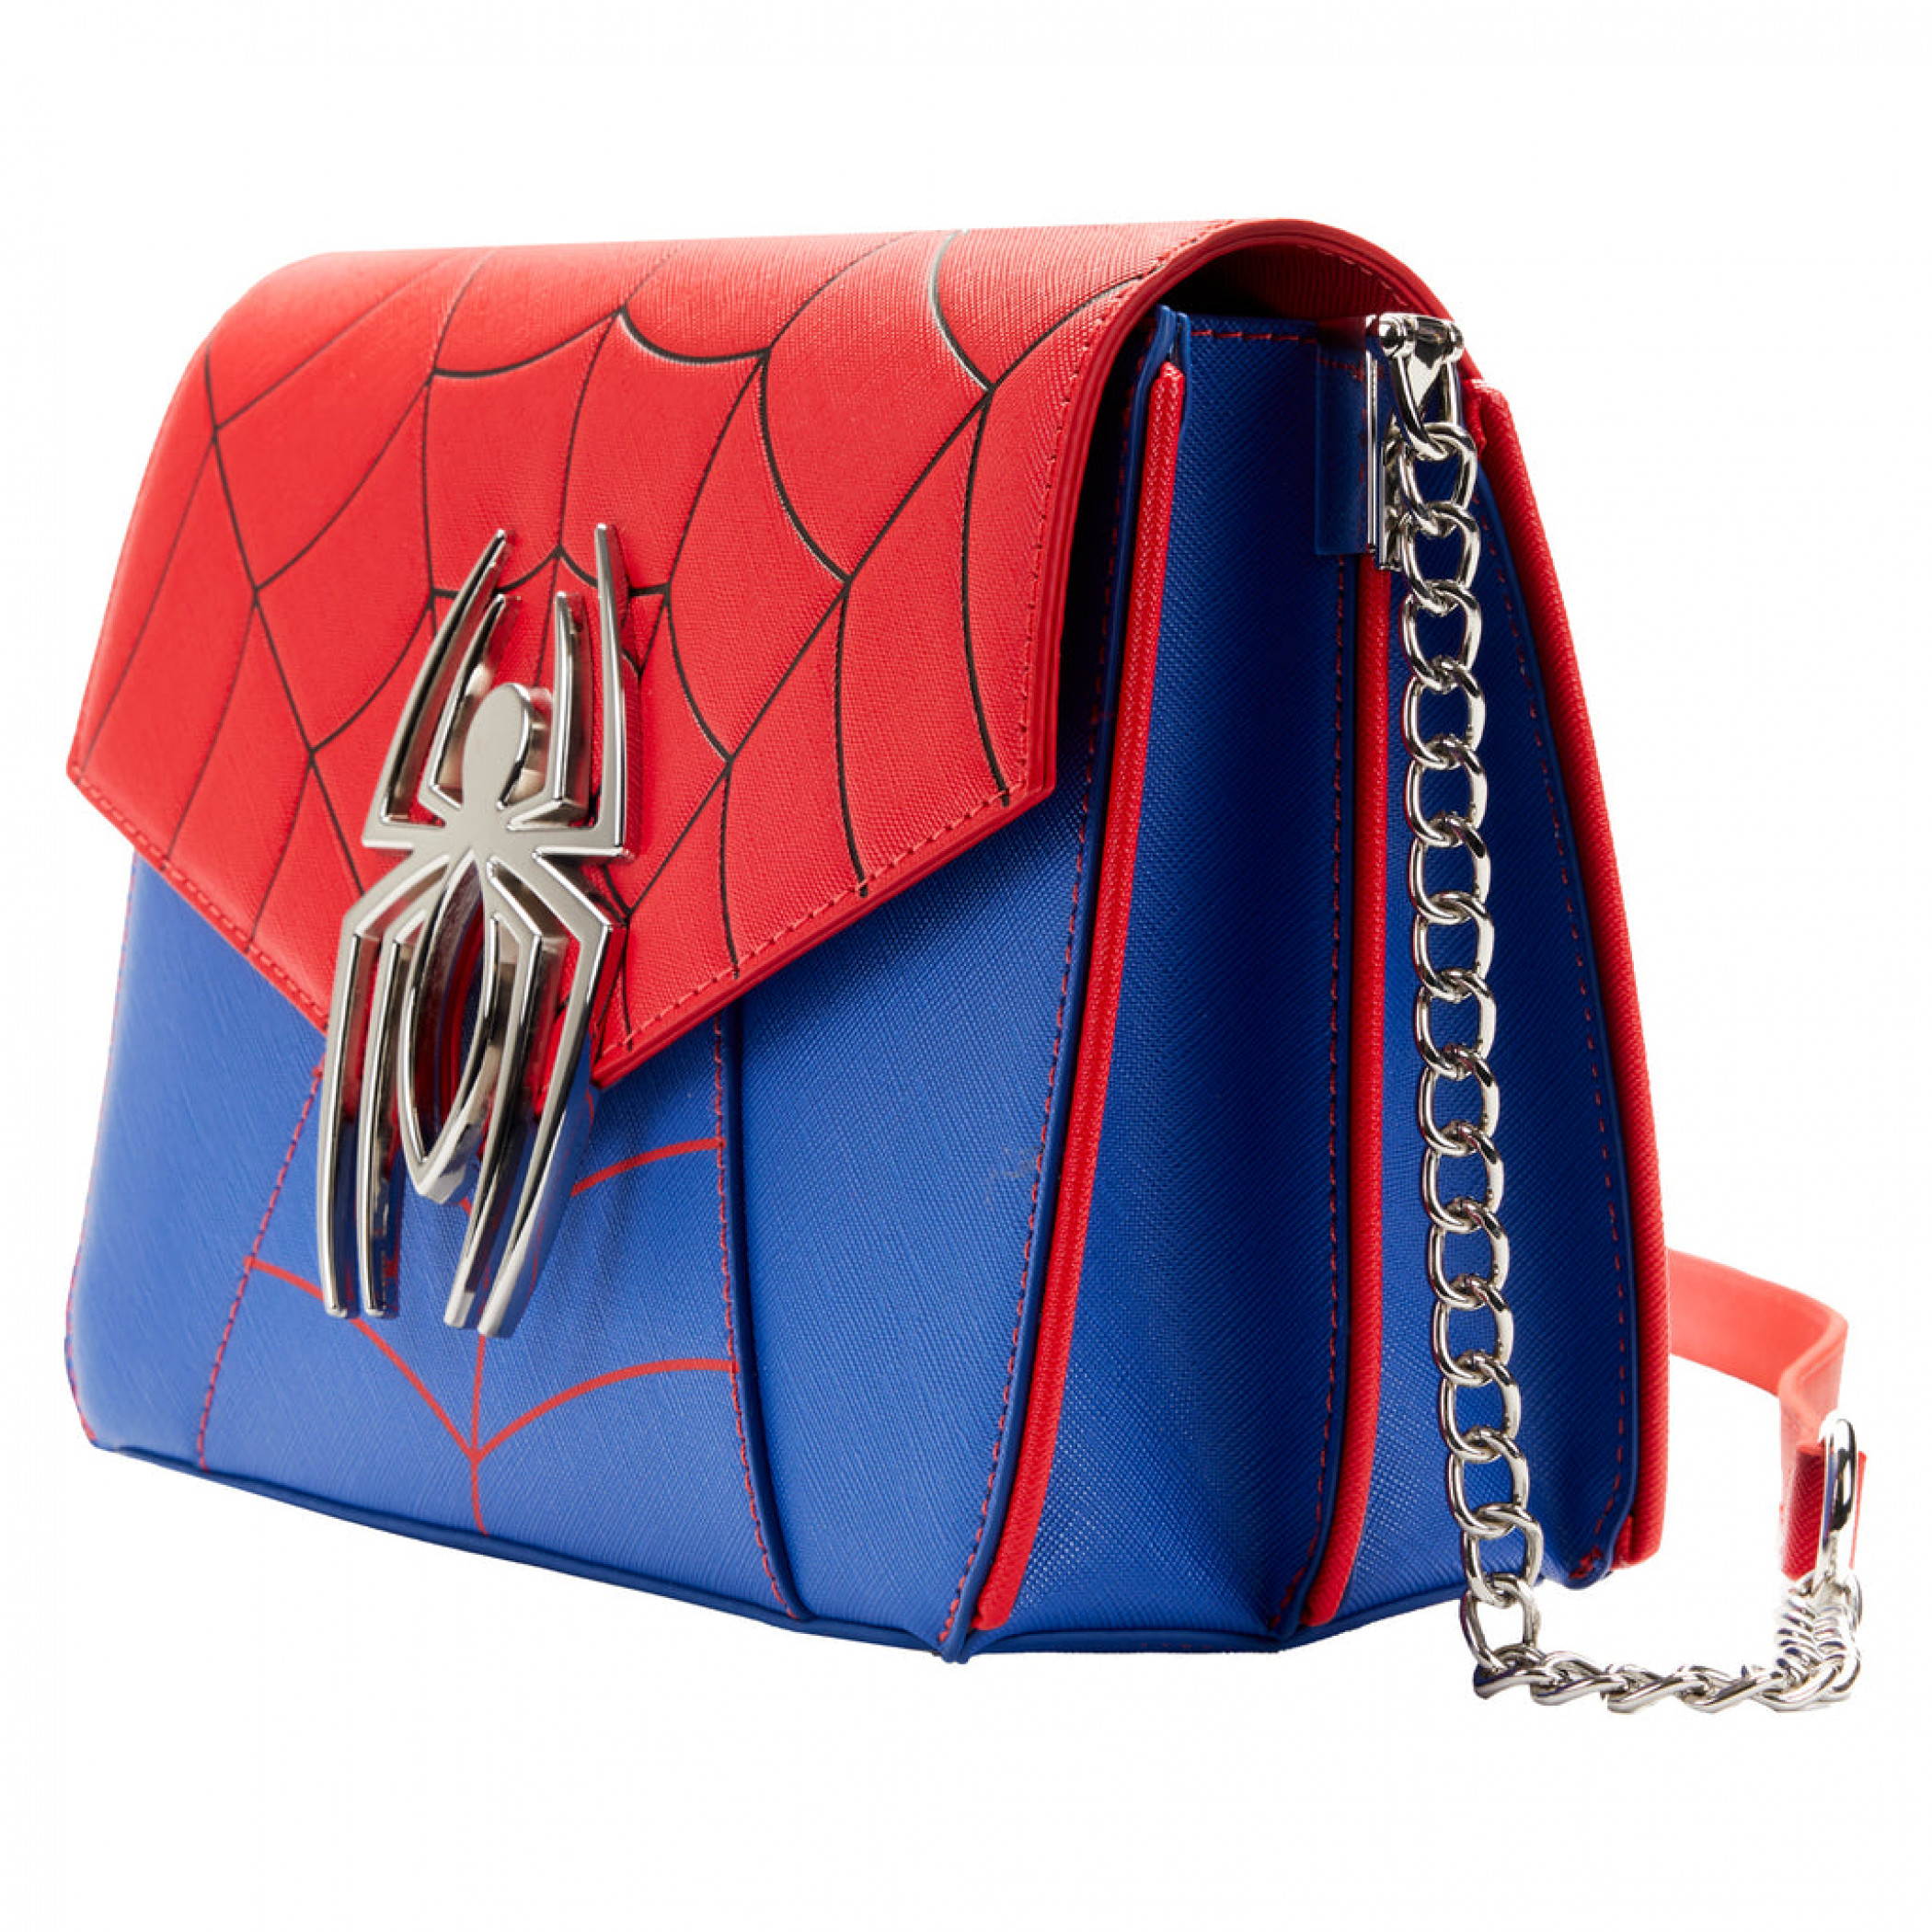 Marvel Comics Spider-Man Symbol Cosplay Loungefly Crossbody Bag